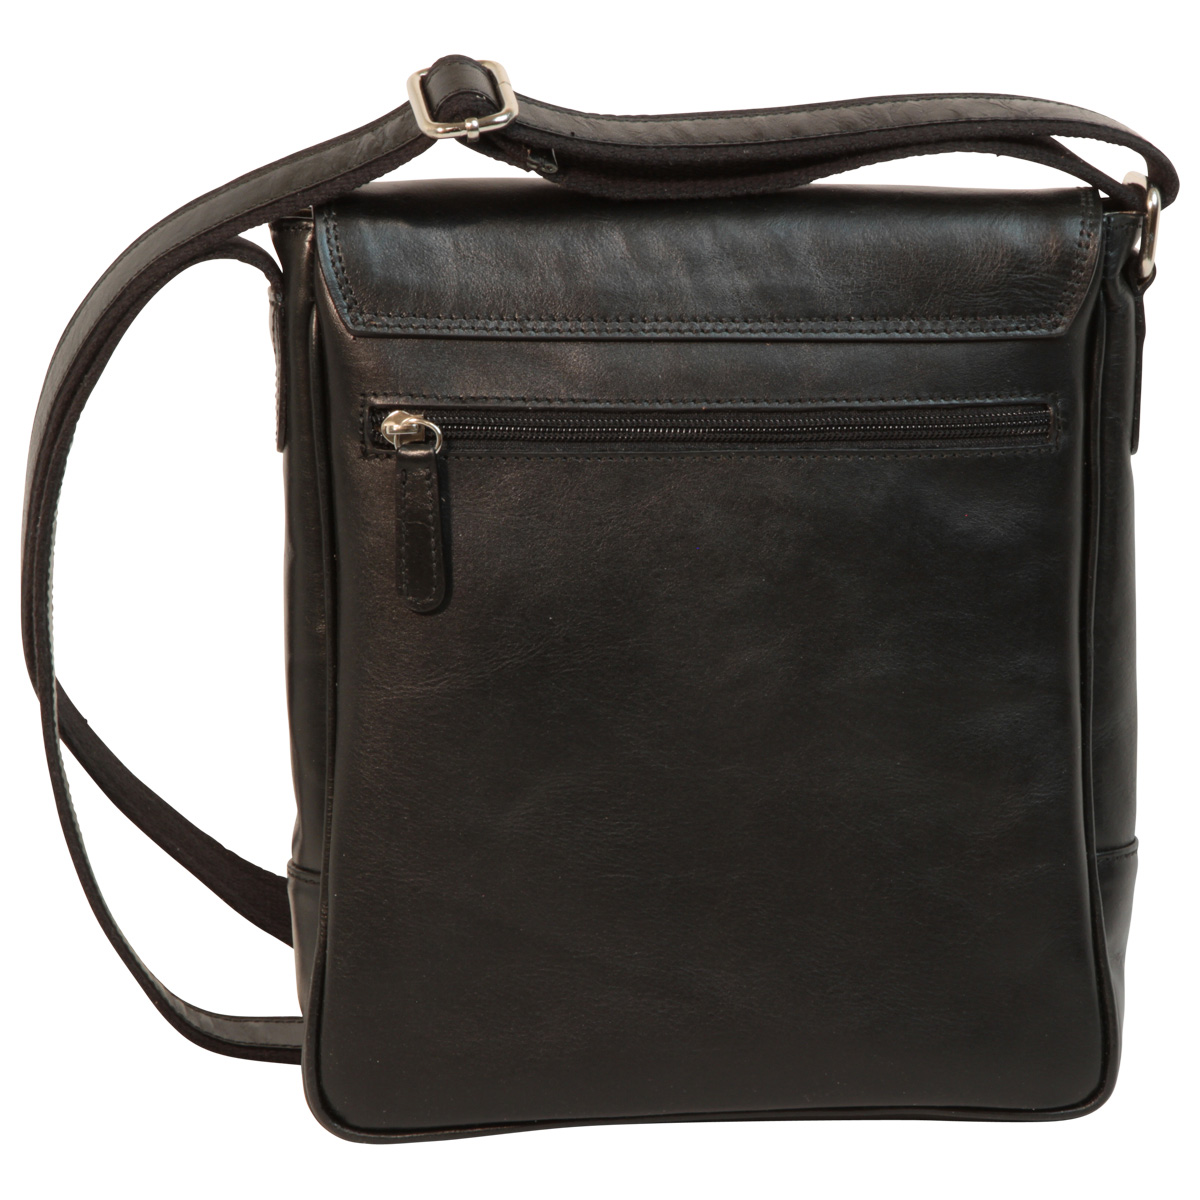 Leather I-Pad bag - Black | 087361NE | EURO | Old Angler Firenze